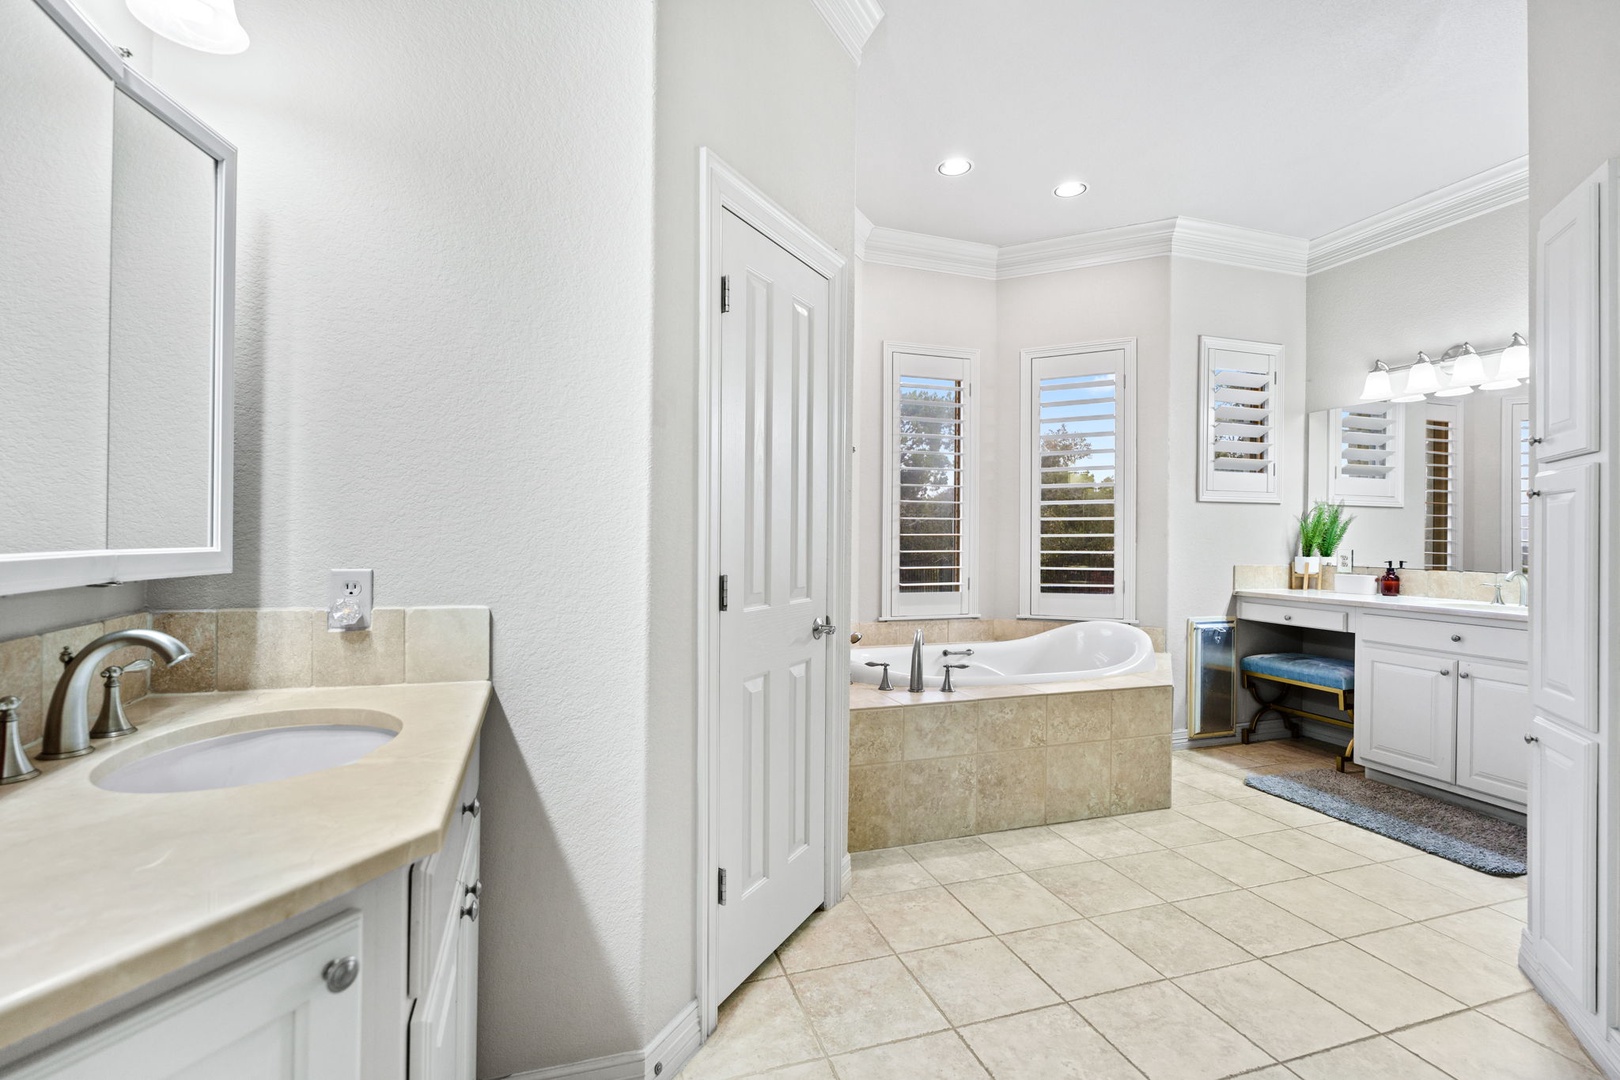 The primary king en suite offers 2 vanities, a soaking tub, & shower